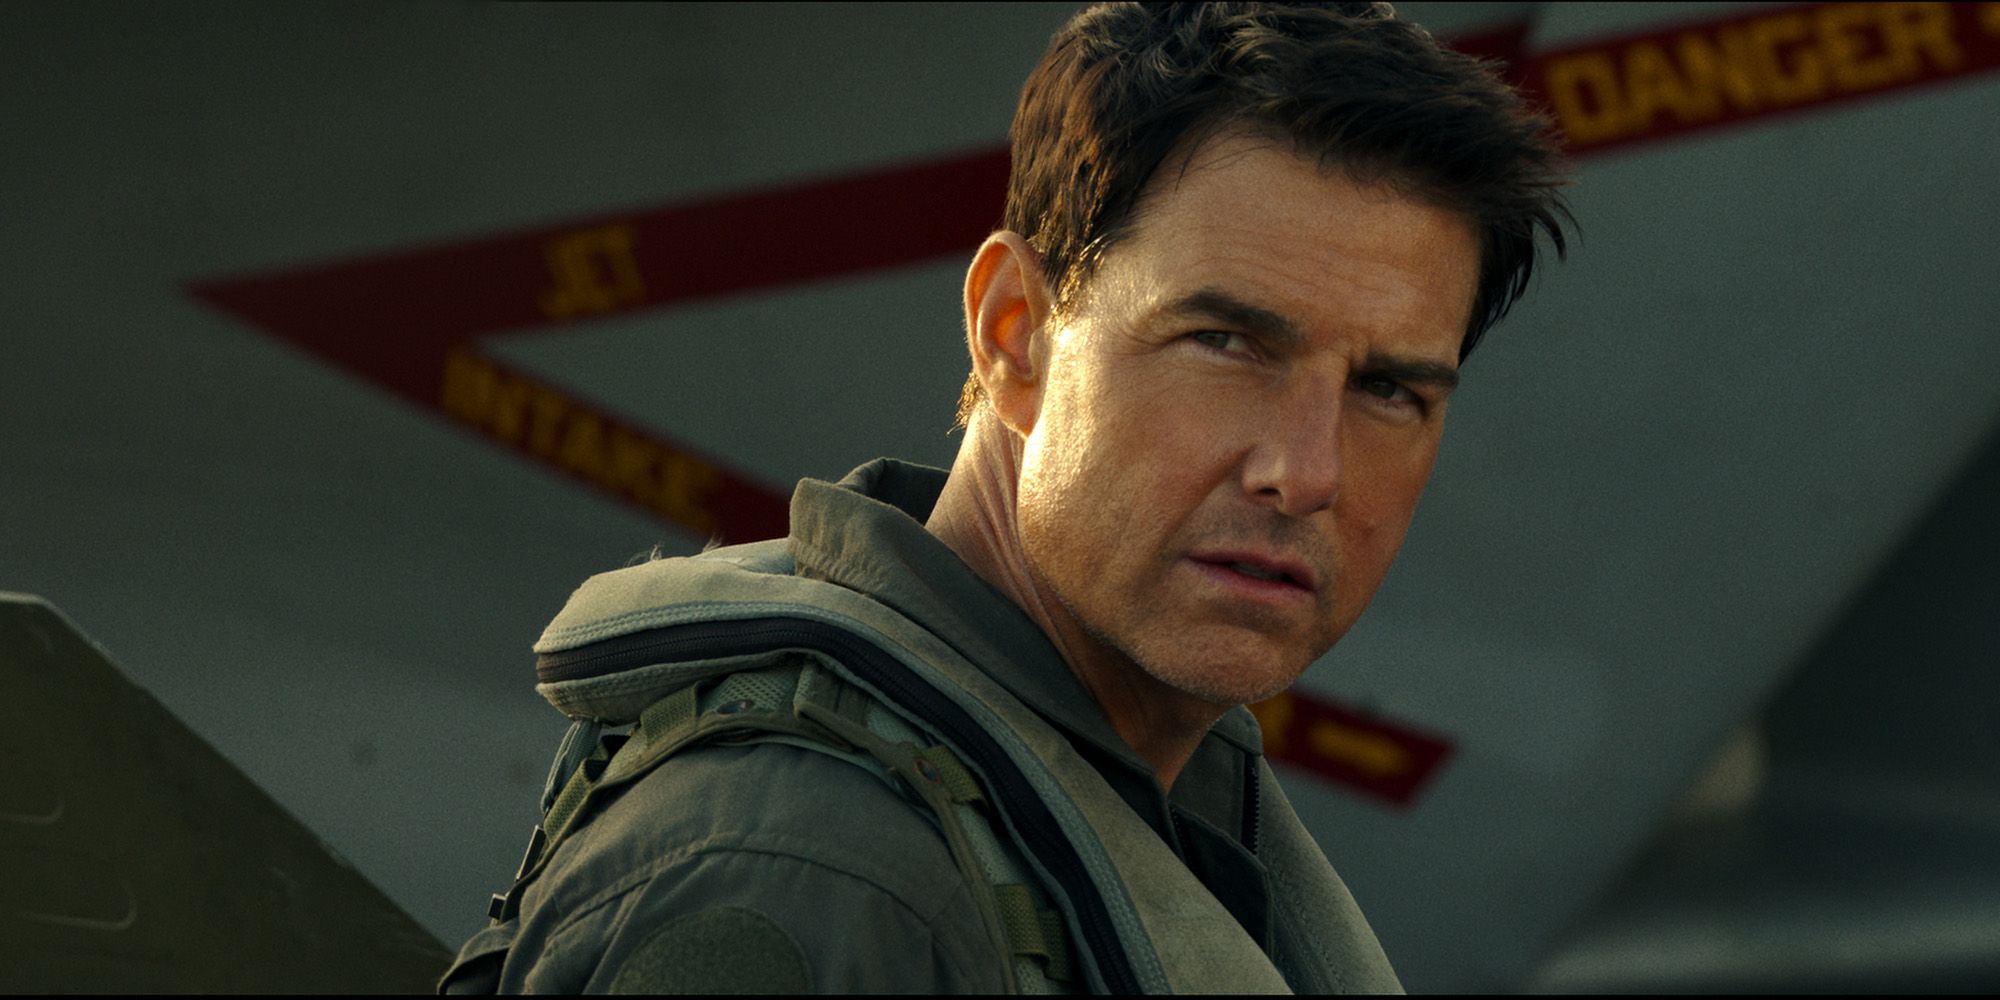 Tom Cruise Fired Twenty One Pilots From Top Gun 2, Says Frontman